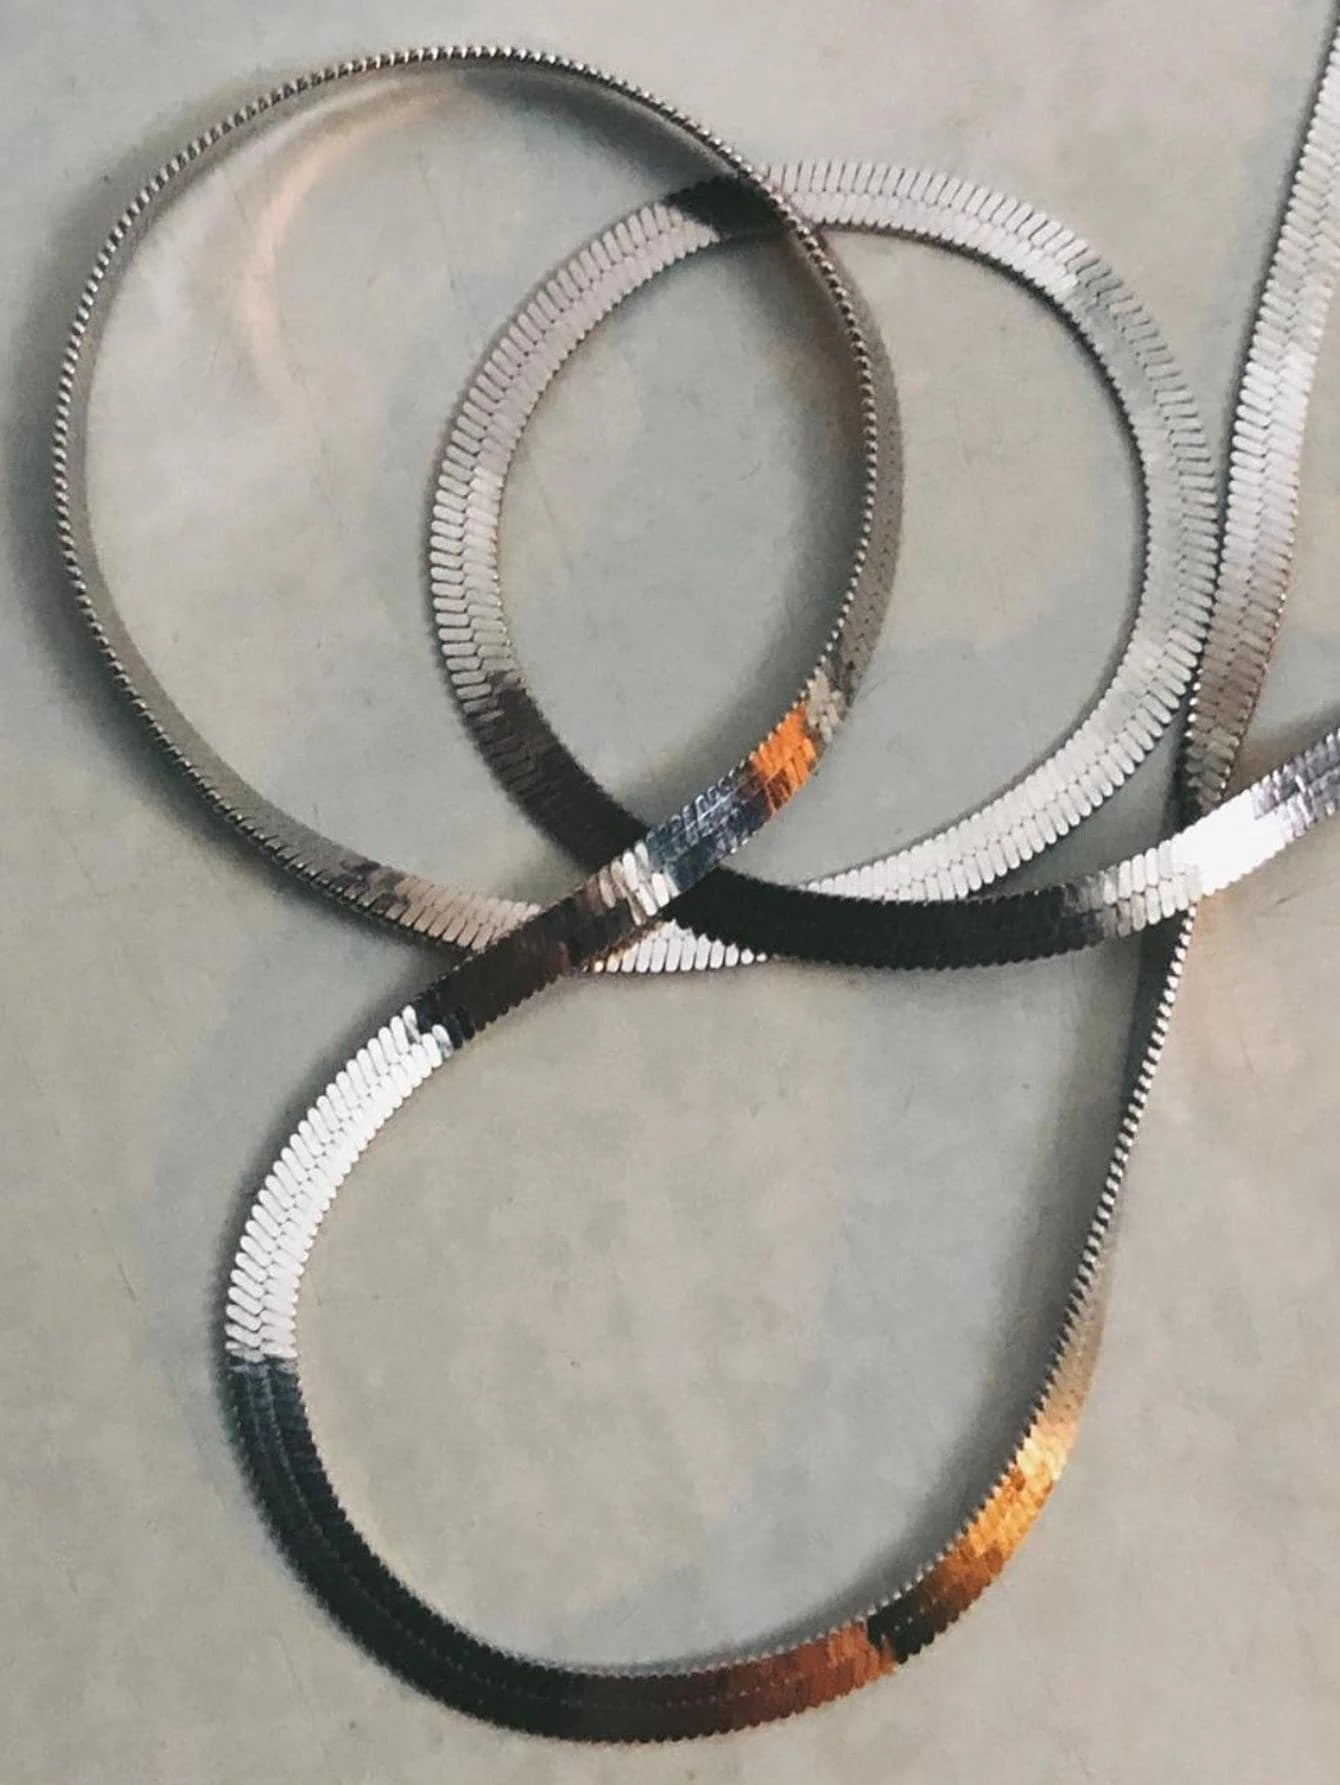 Fashion Stainless Steel Herringbone Design Chain